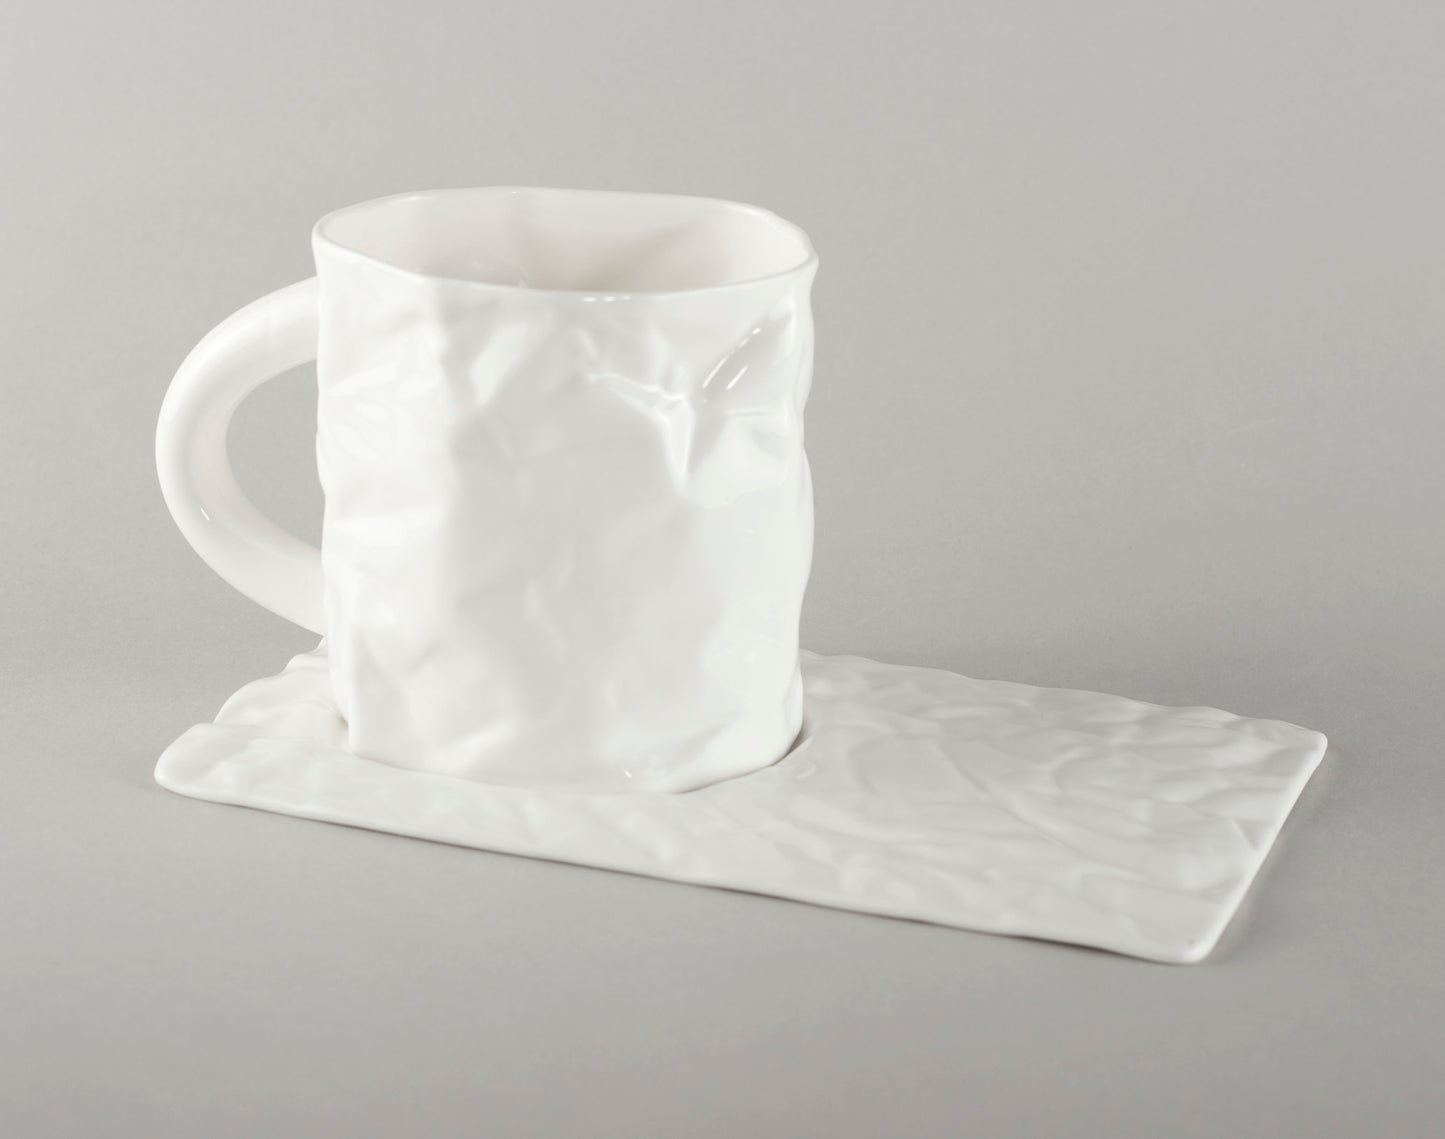 Porcelain Crumpled Tea Mug Base (mug not included)